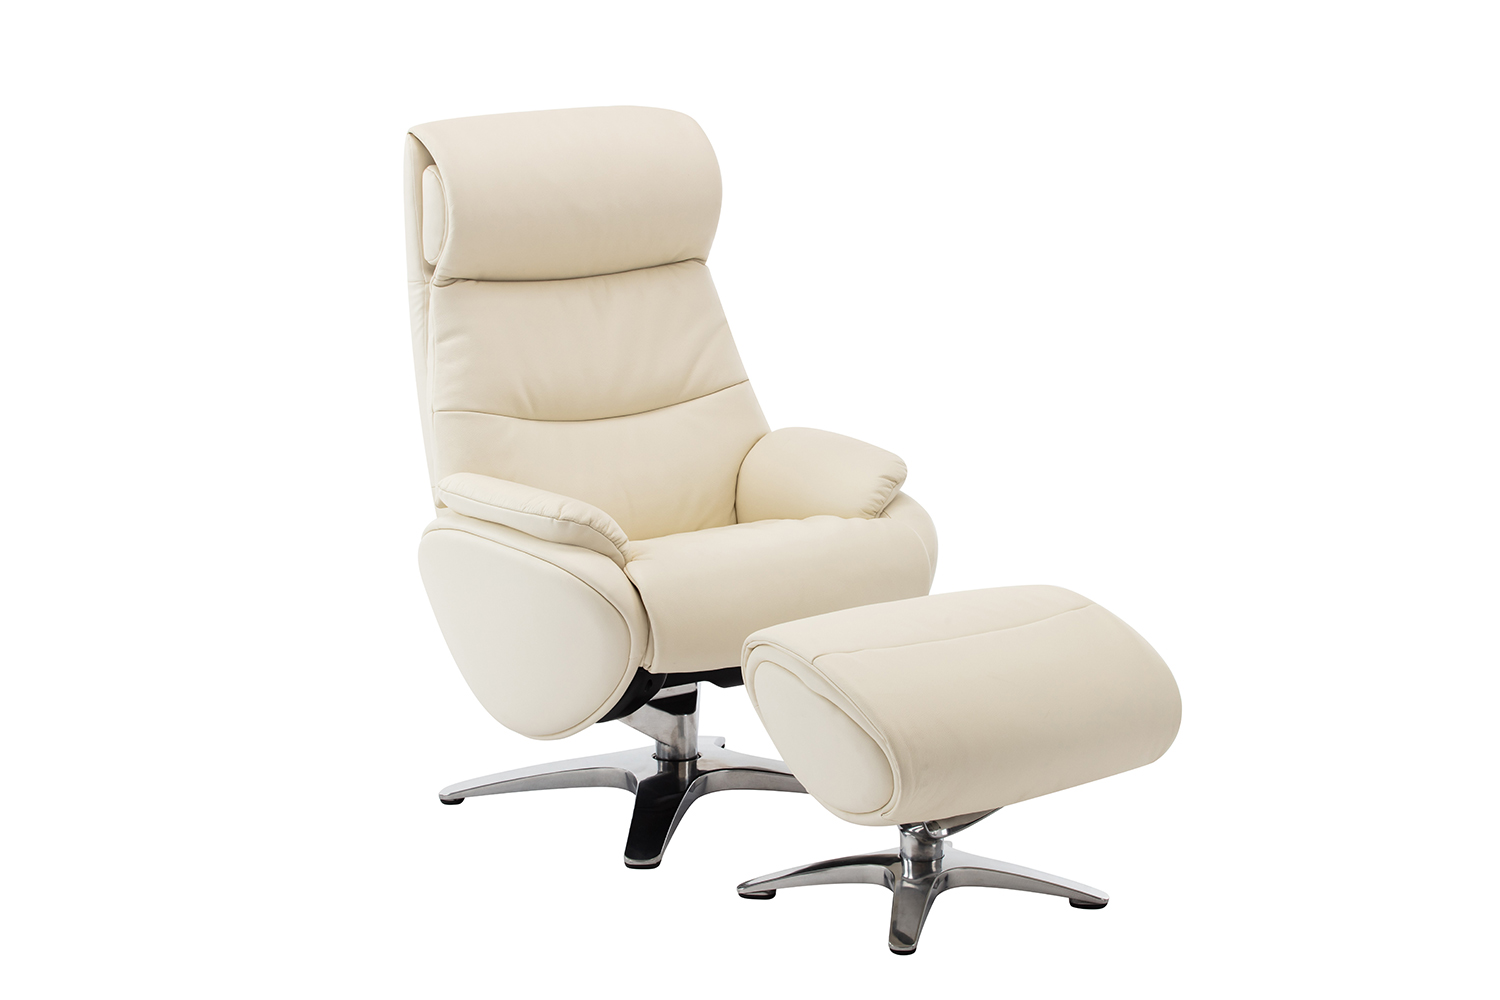 Barcalounger Adler Pedestal Recliner Chair and Ottoman - Capri White/Leather match